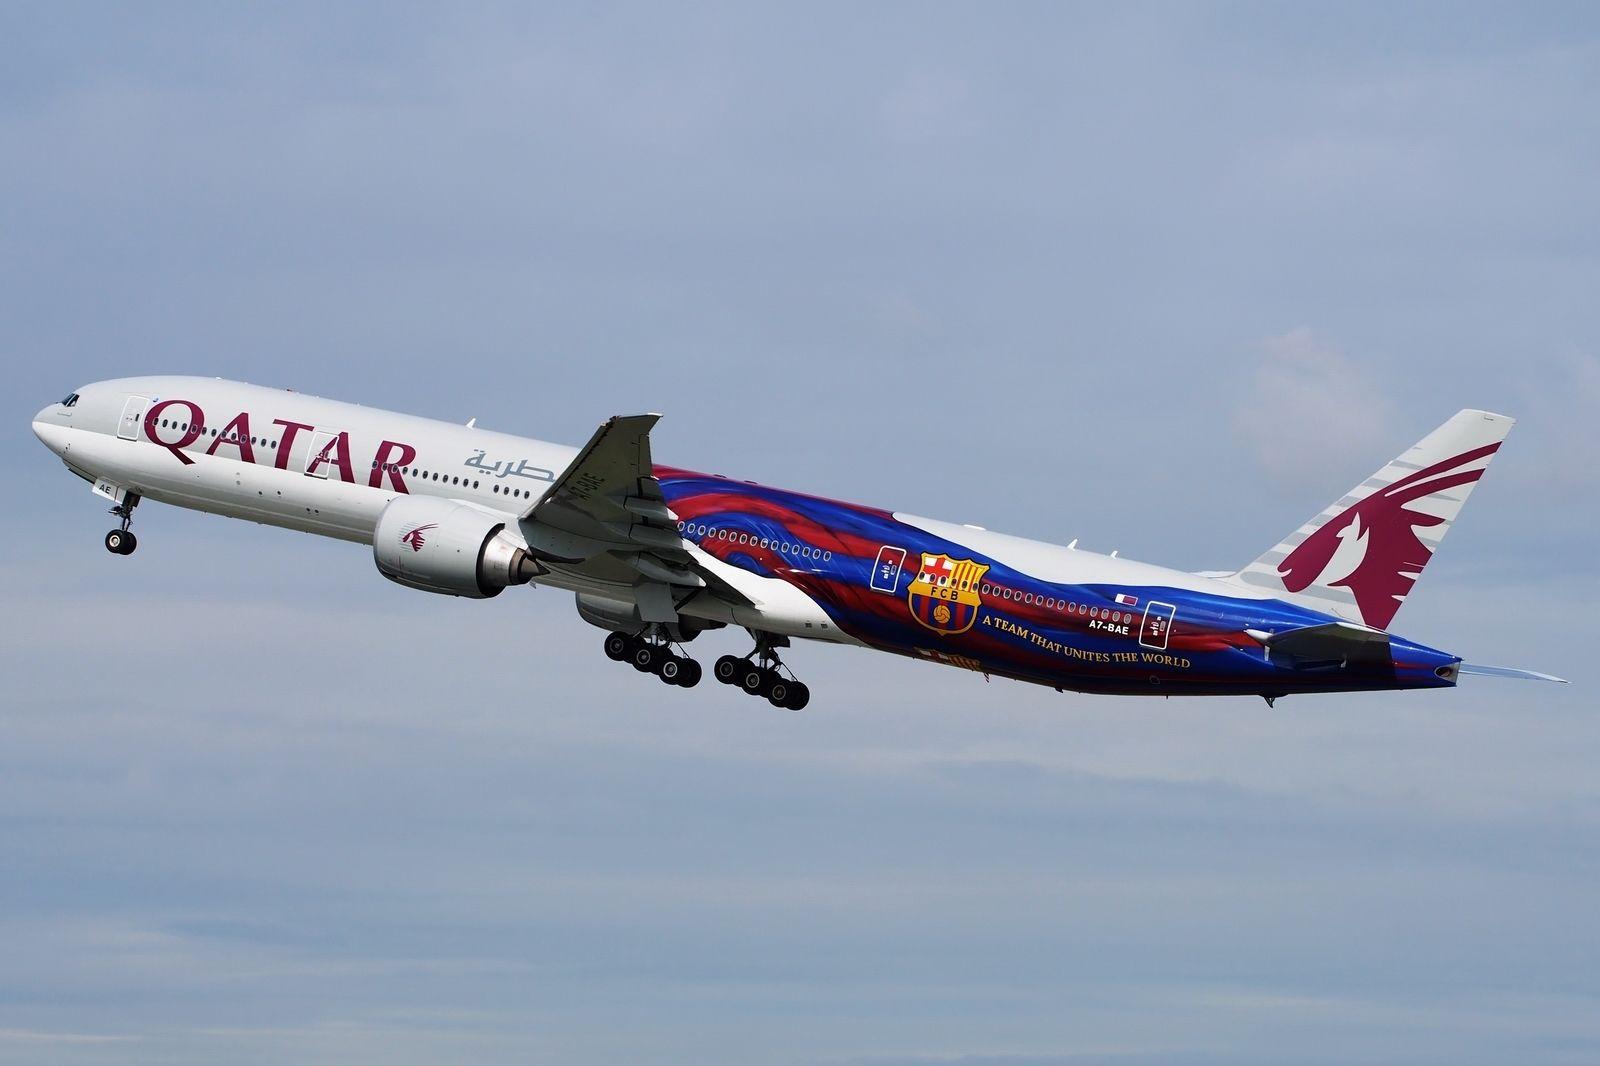 Qatar Airways Boeing 777 300ER FC Barcelona Livery. Aircraft